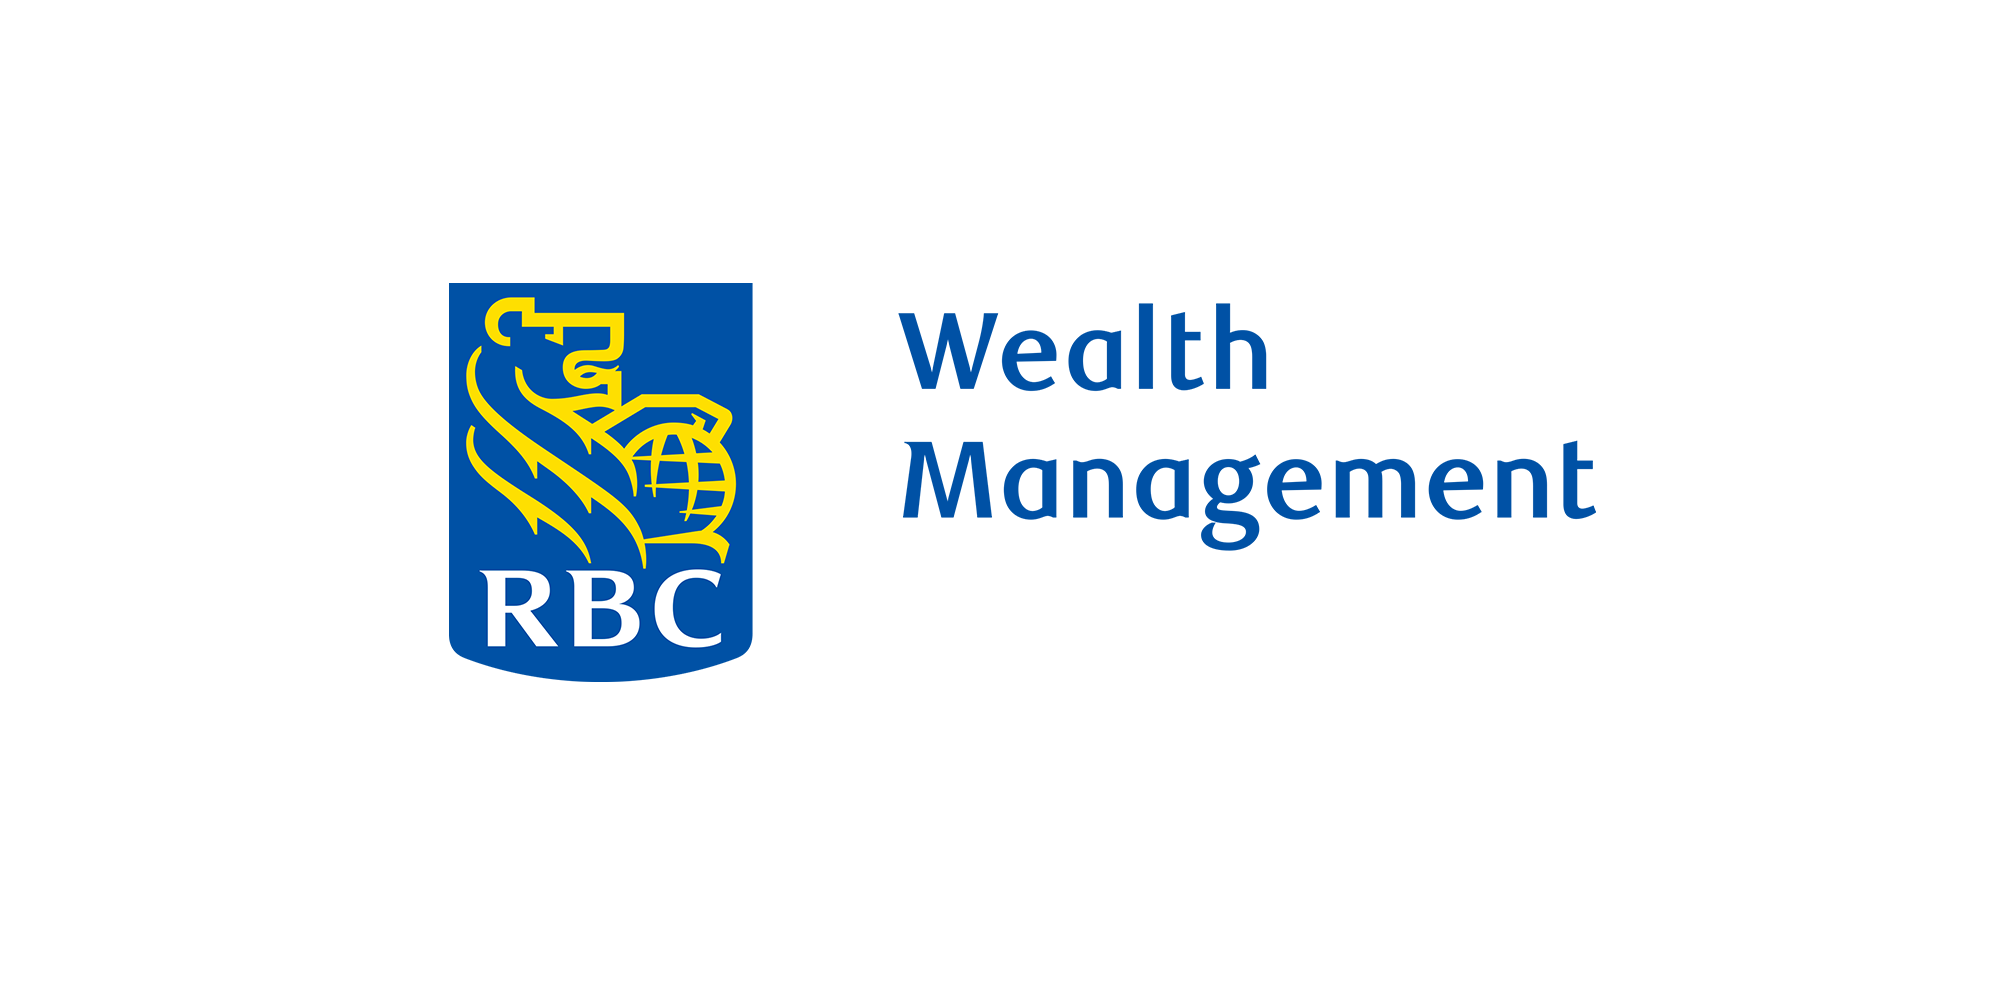 rbc wealth management logo